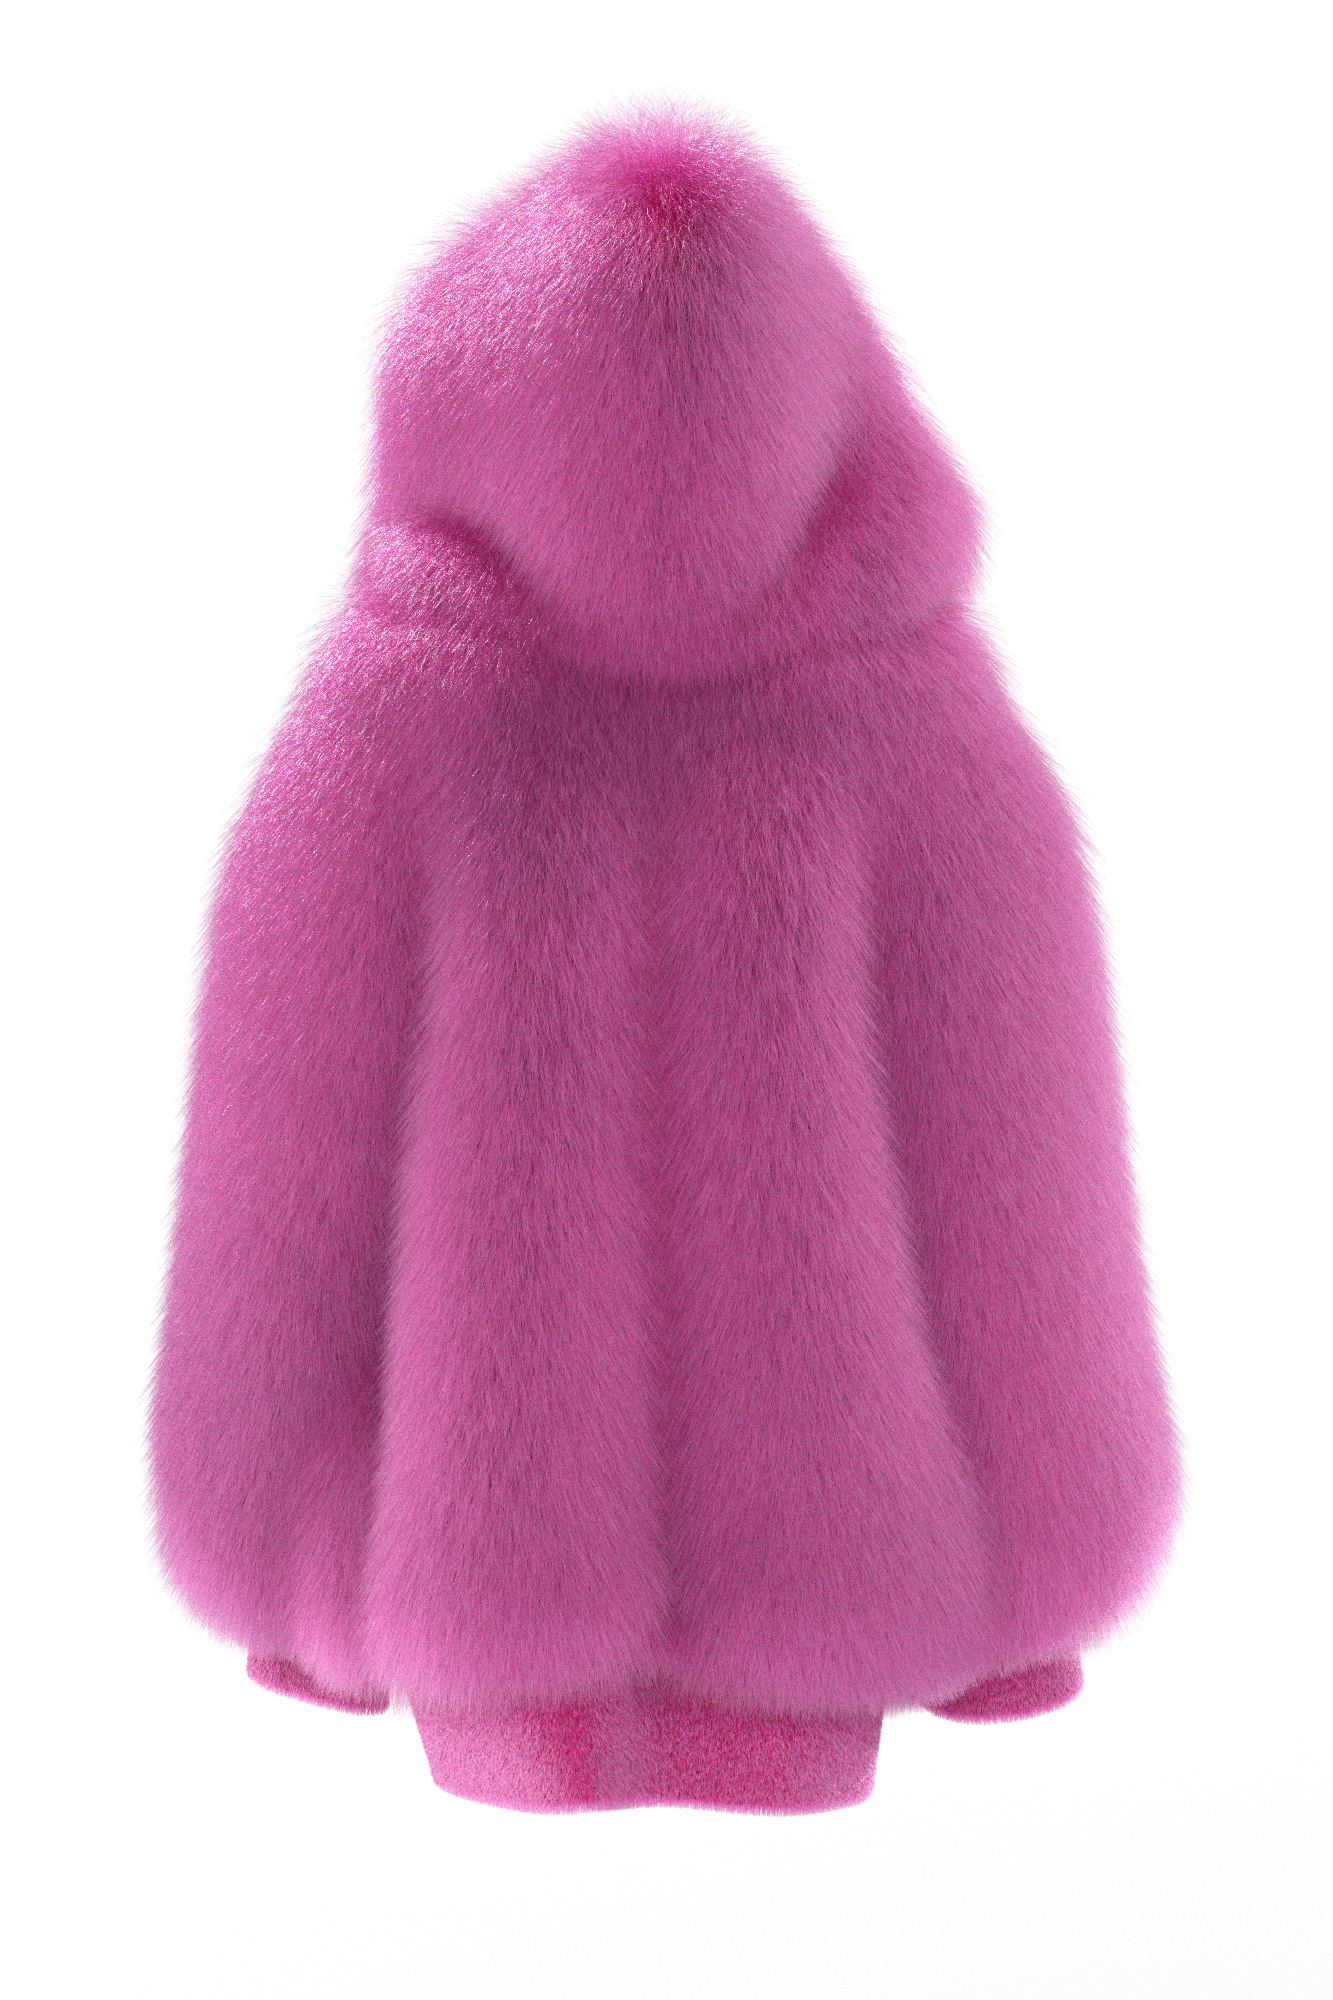  | Giant Oversized Fur Hoodie Pink